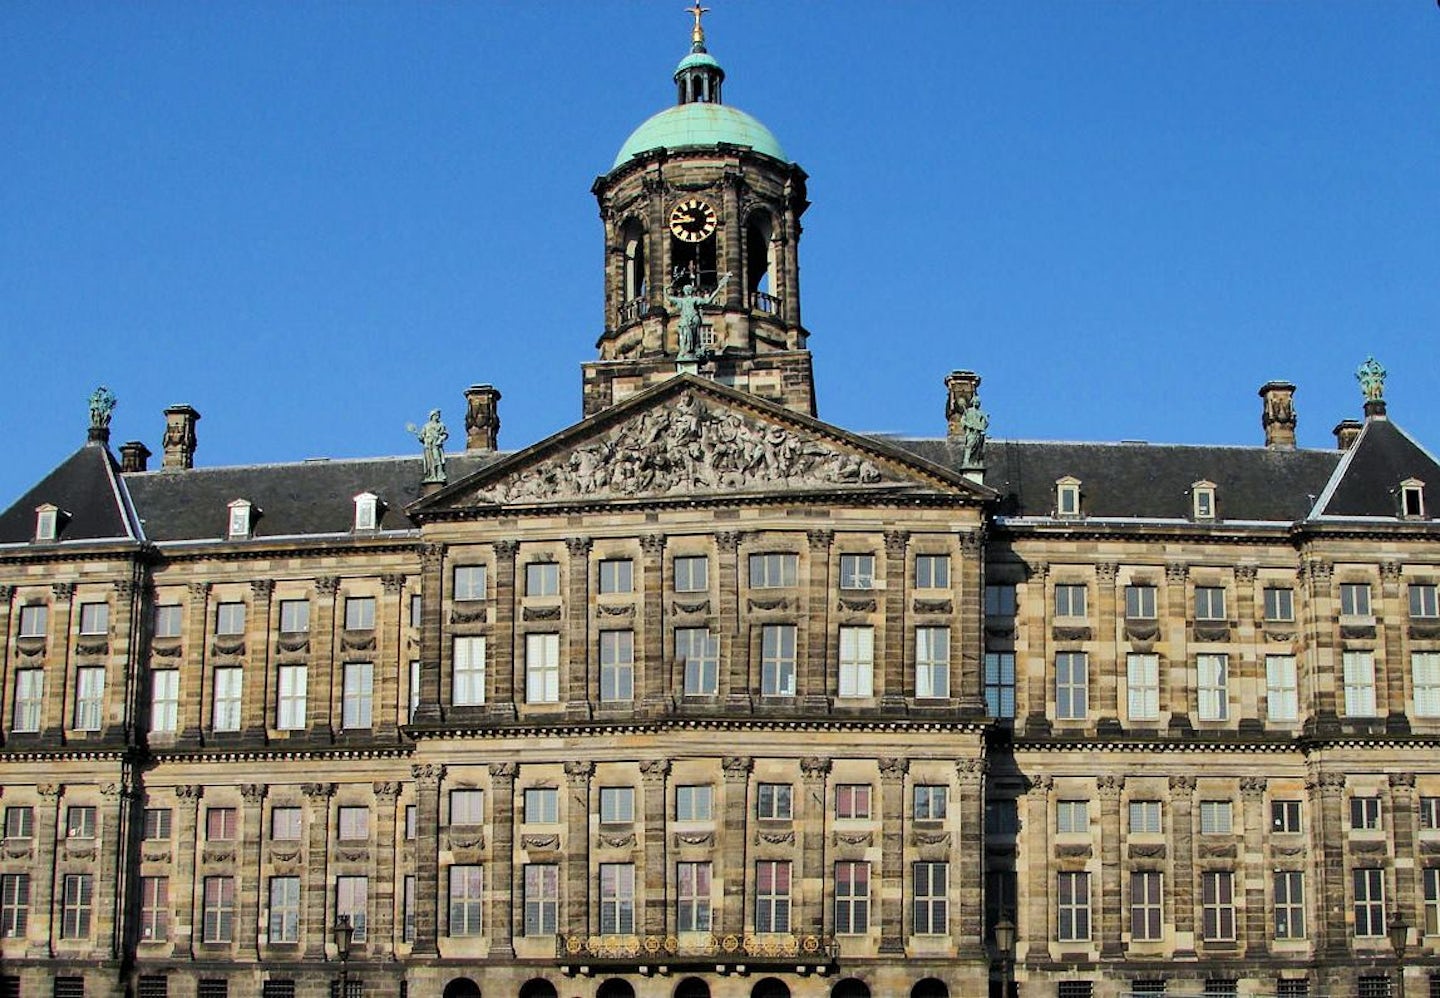 Royal Palace - Amsterdam, Netherlands (Post Cruise)